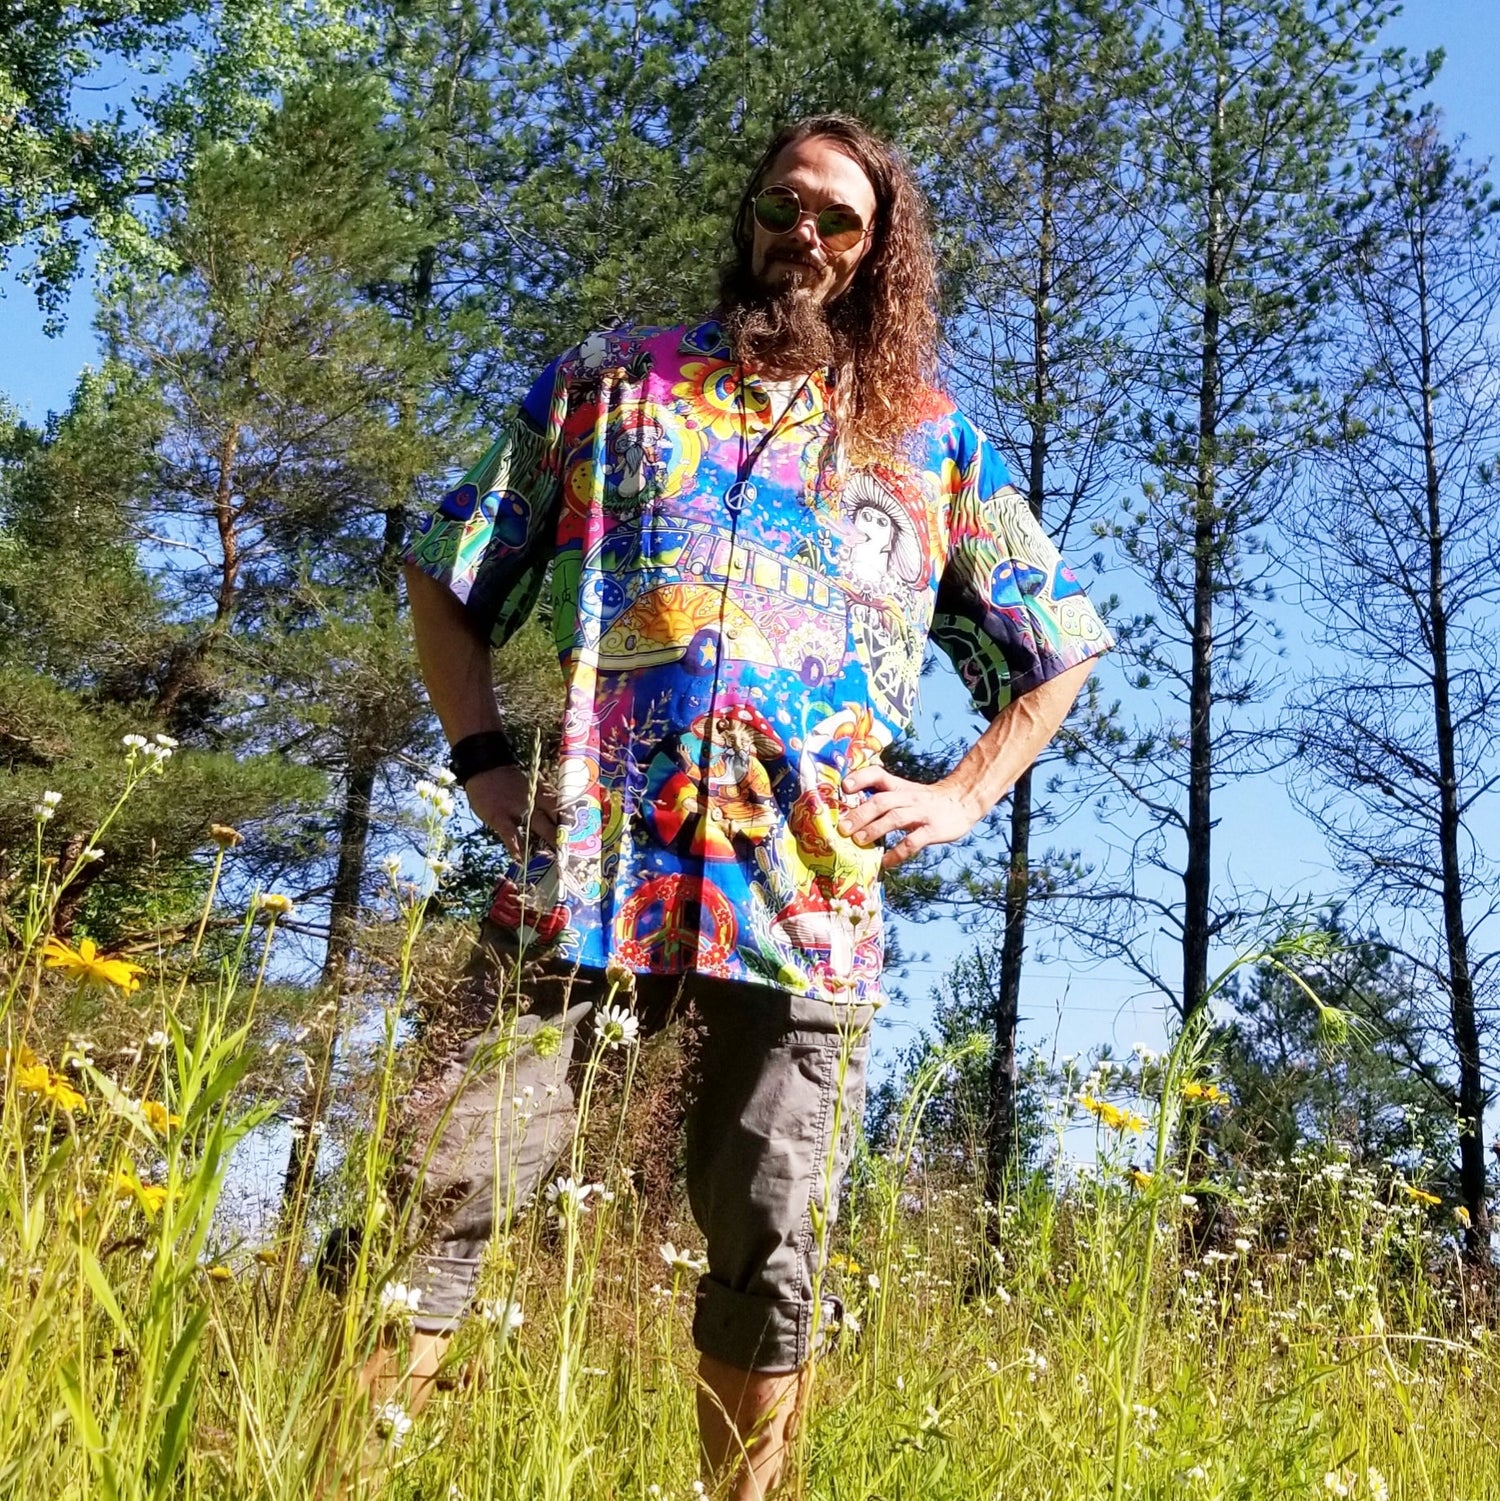 mens hippie clothing at the boho hippie hut midland michigan